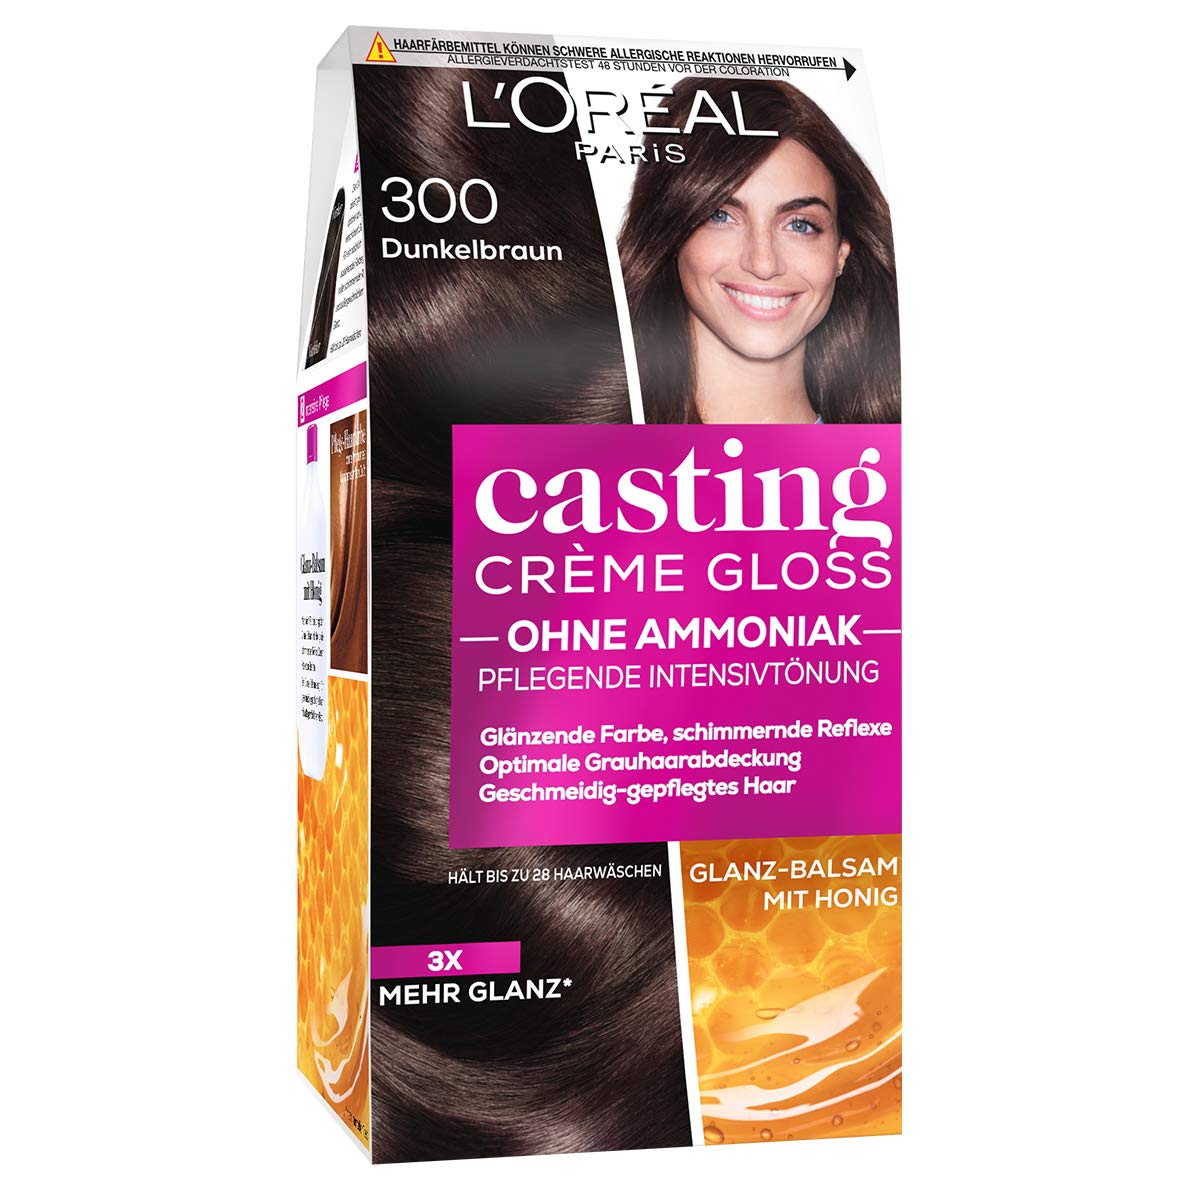 L'Oréal Paris L\'Oréal Paris Casting Crème Gloss Hair Colour, Ammonia-Free and Silicone-Free Nourishing Intensive Hair Colour with Crème Gloss, No. 300 Dark Brown (Brown), Pack of 1, ‎300